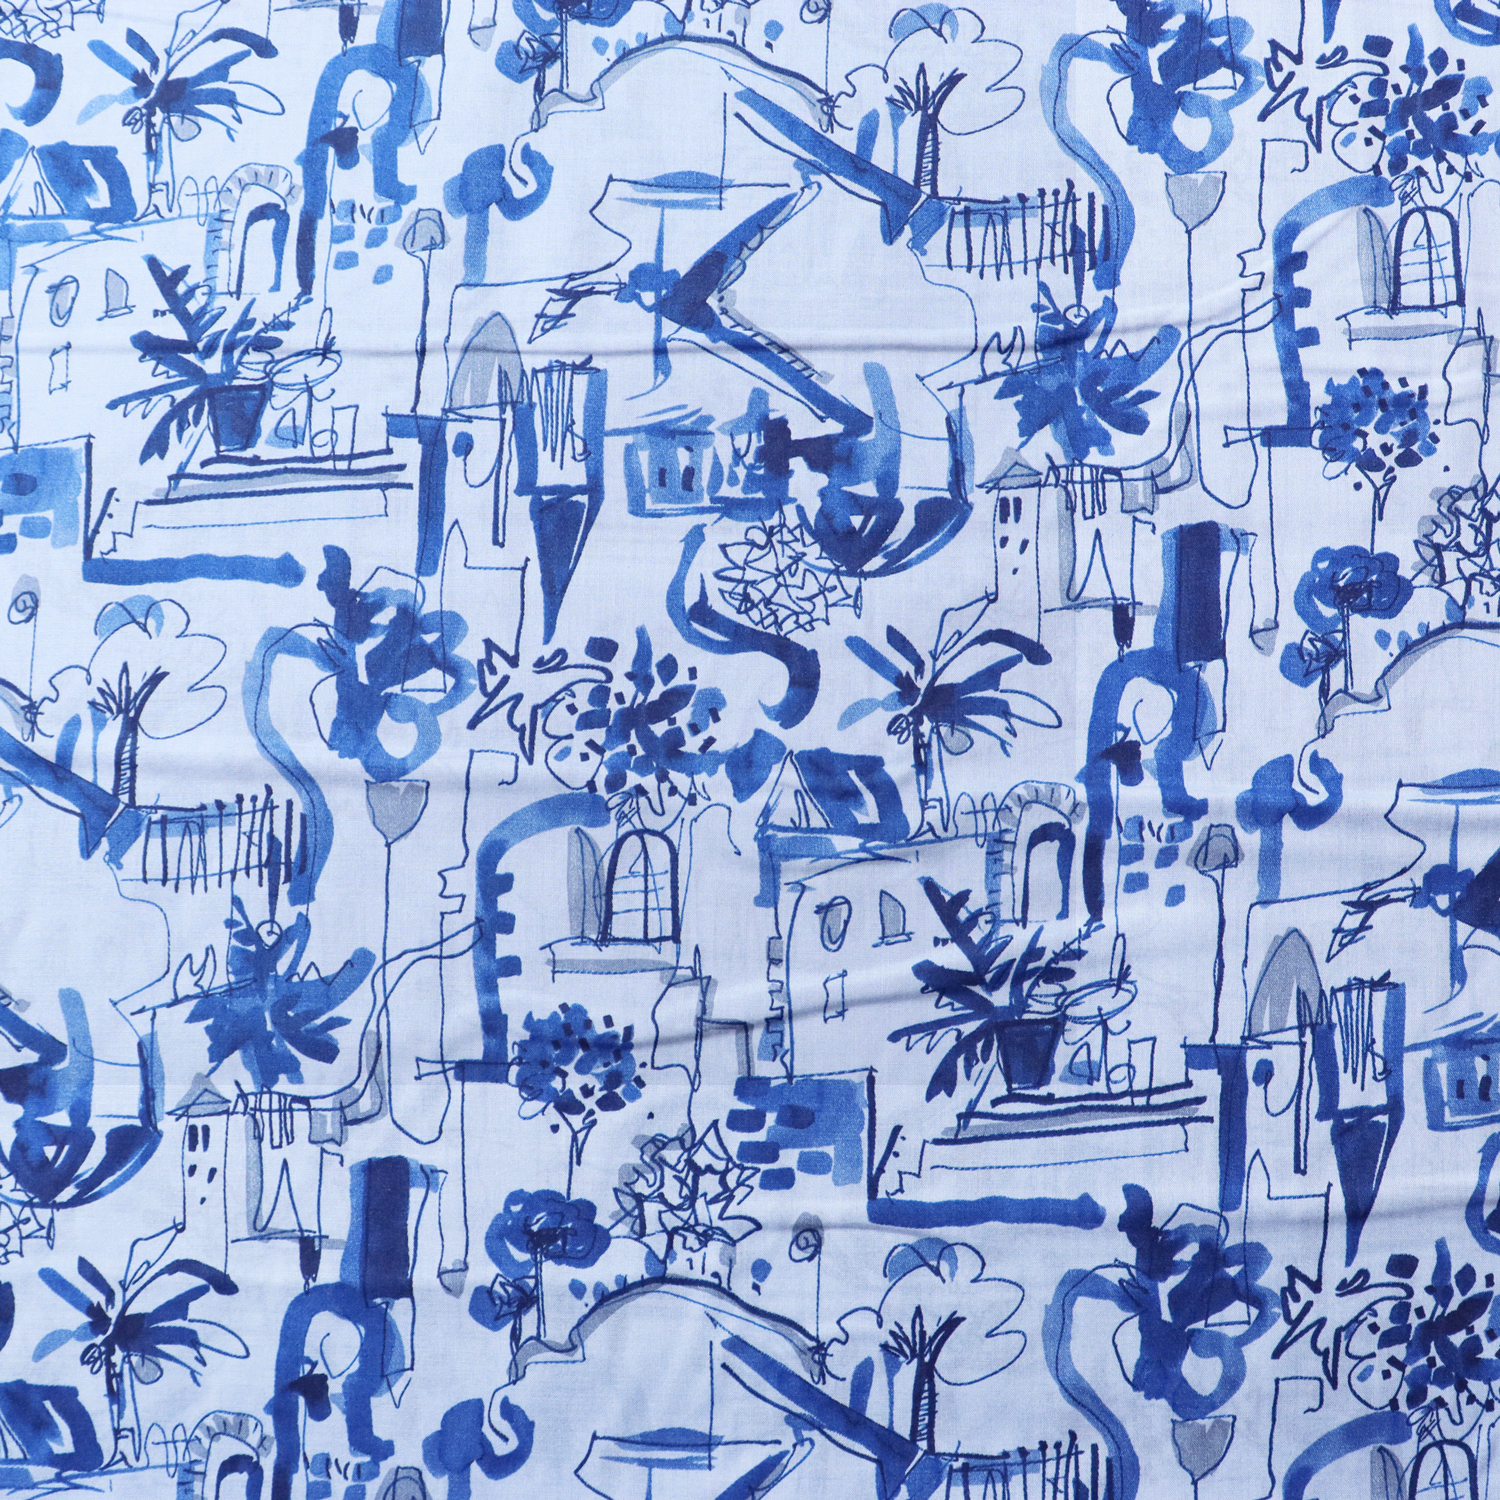 【WEB限定・原反特価】■7022-610-10E 60ローン 手描き風景 ブルー 約110cm巾 (巻)